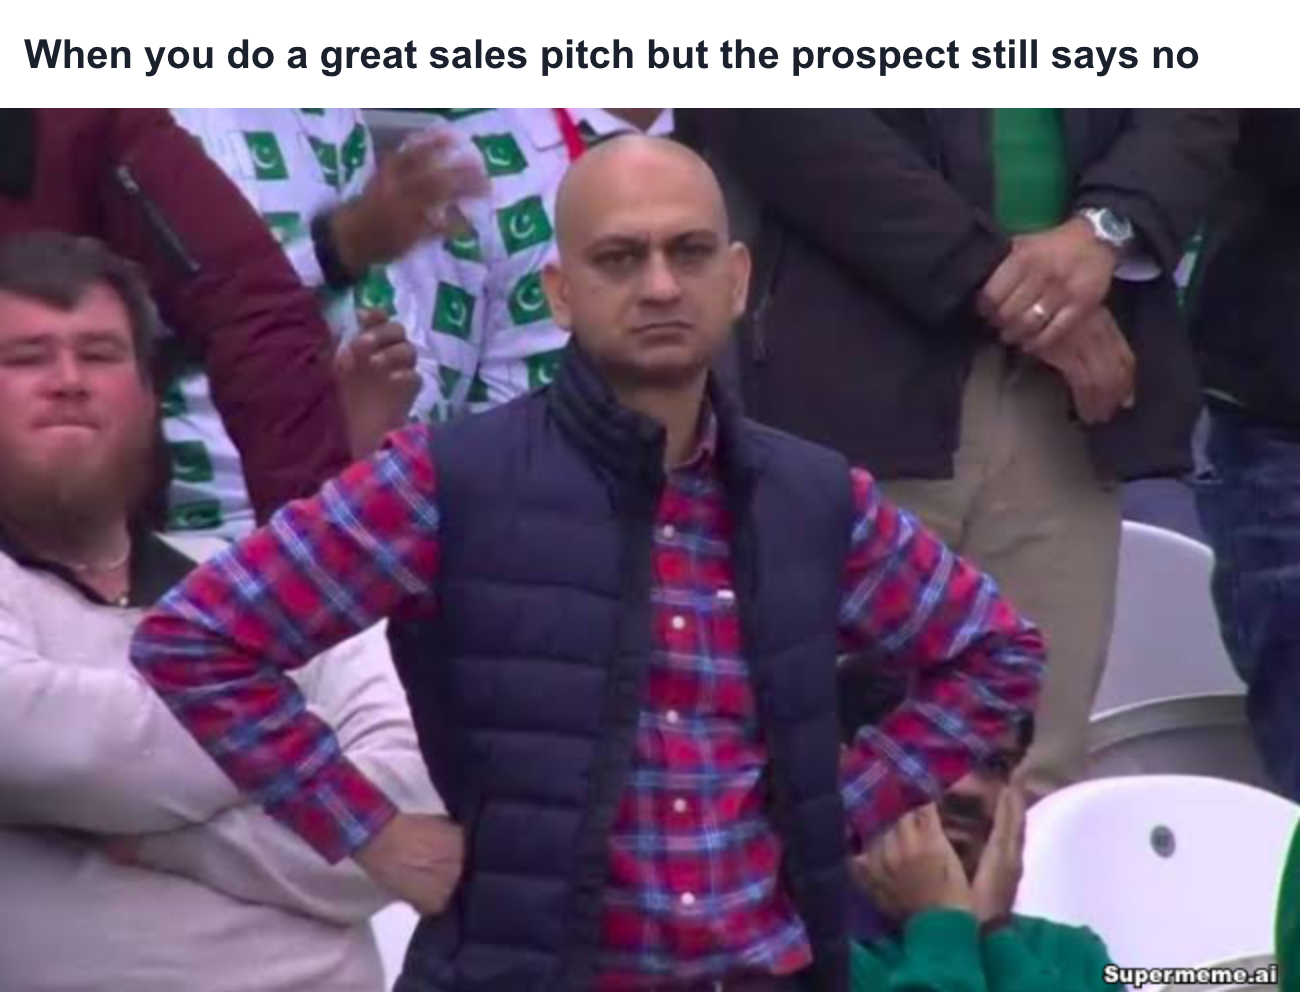 sales meme on prospect saying no